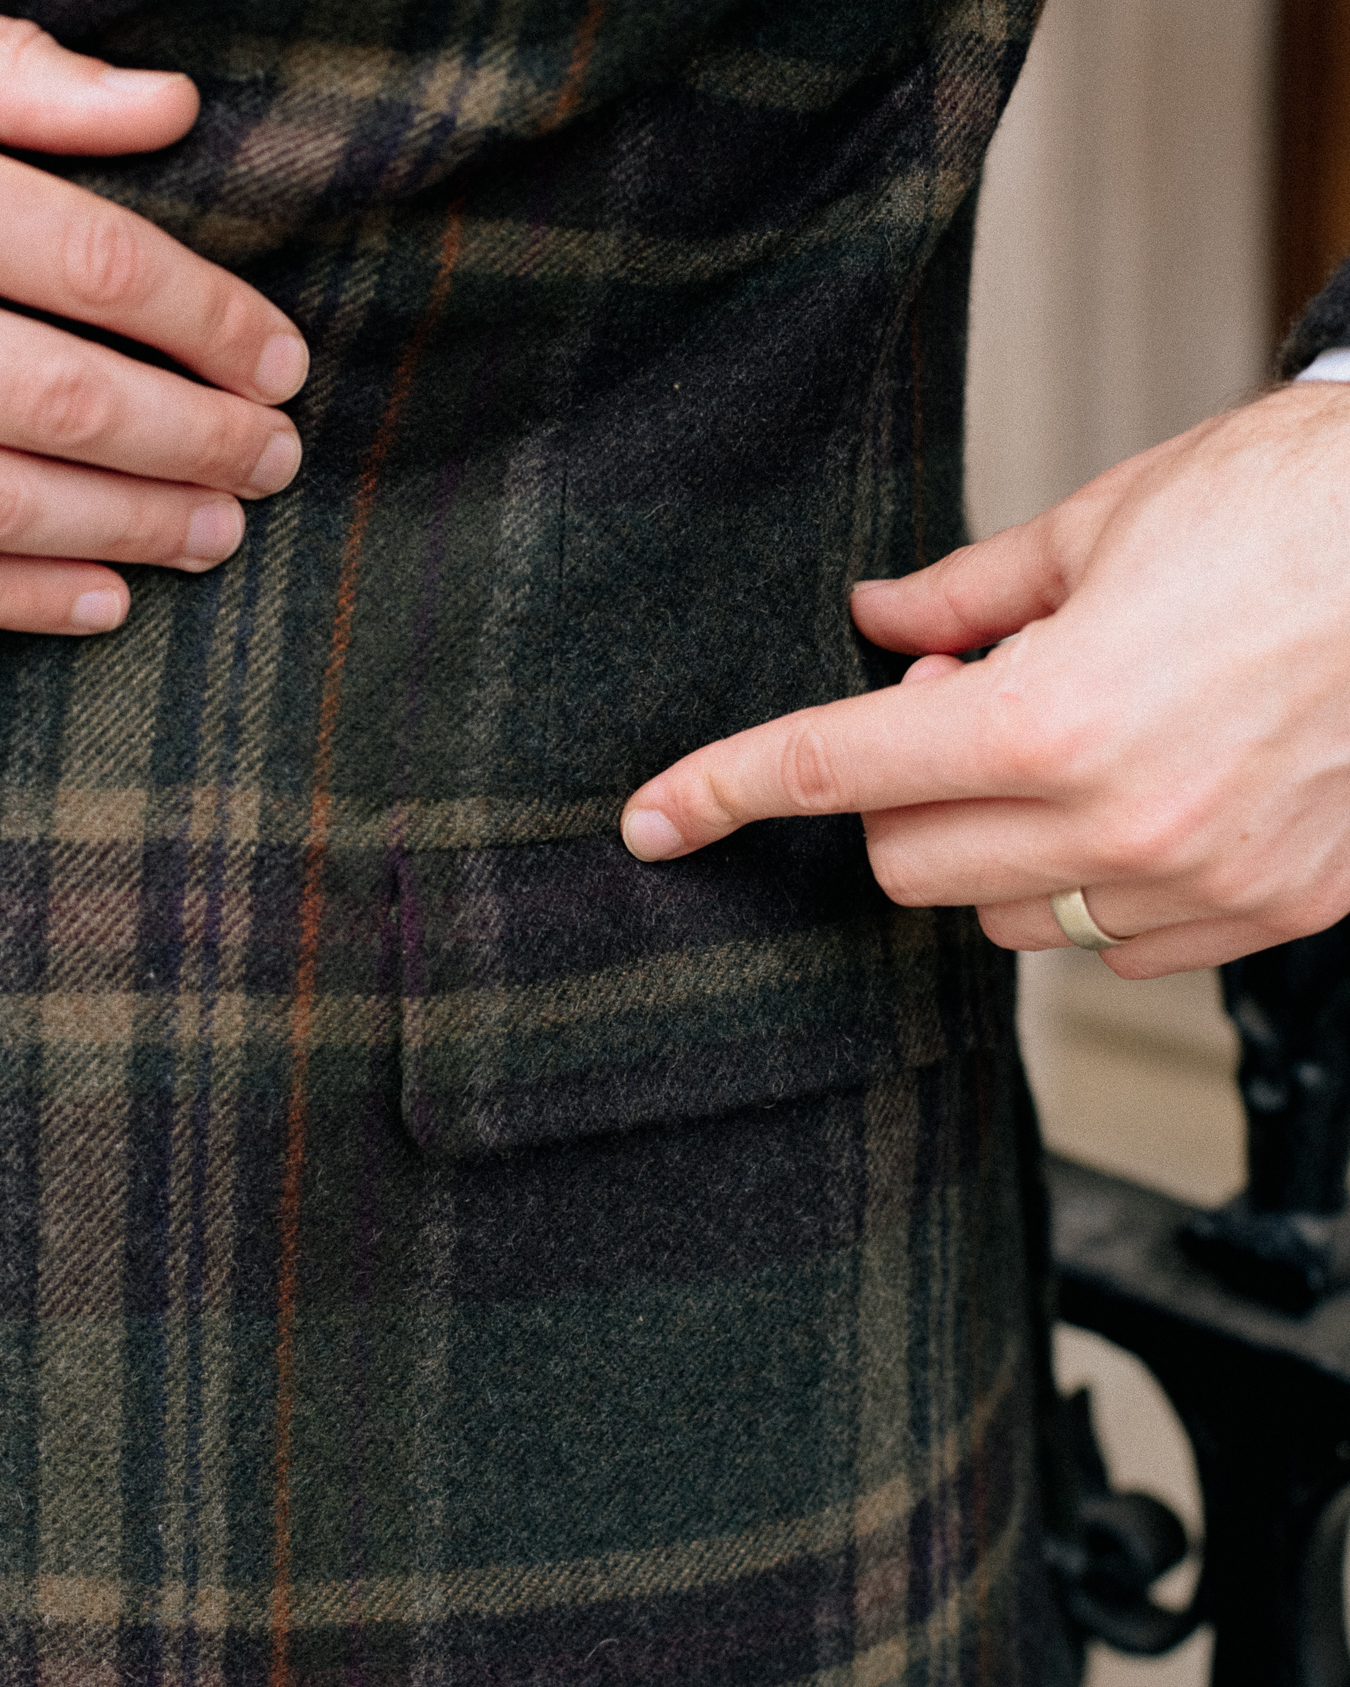 Matching checks on a jacket – Permanent Style